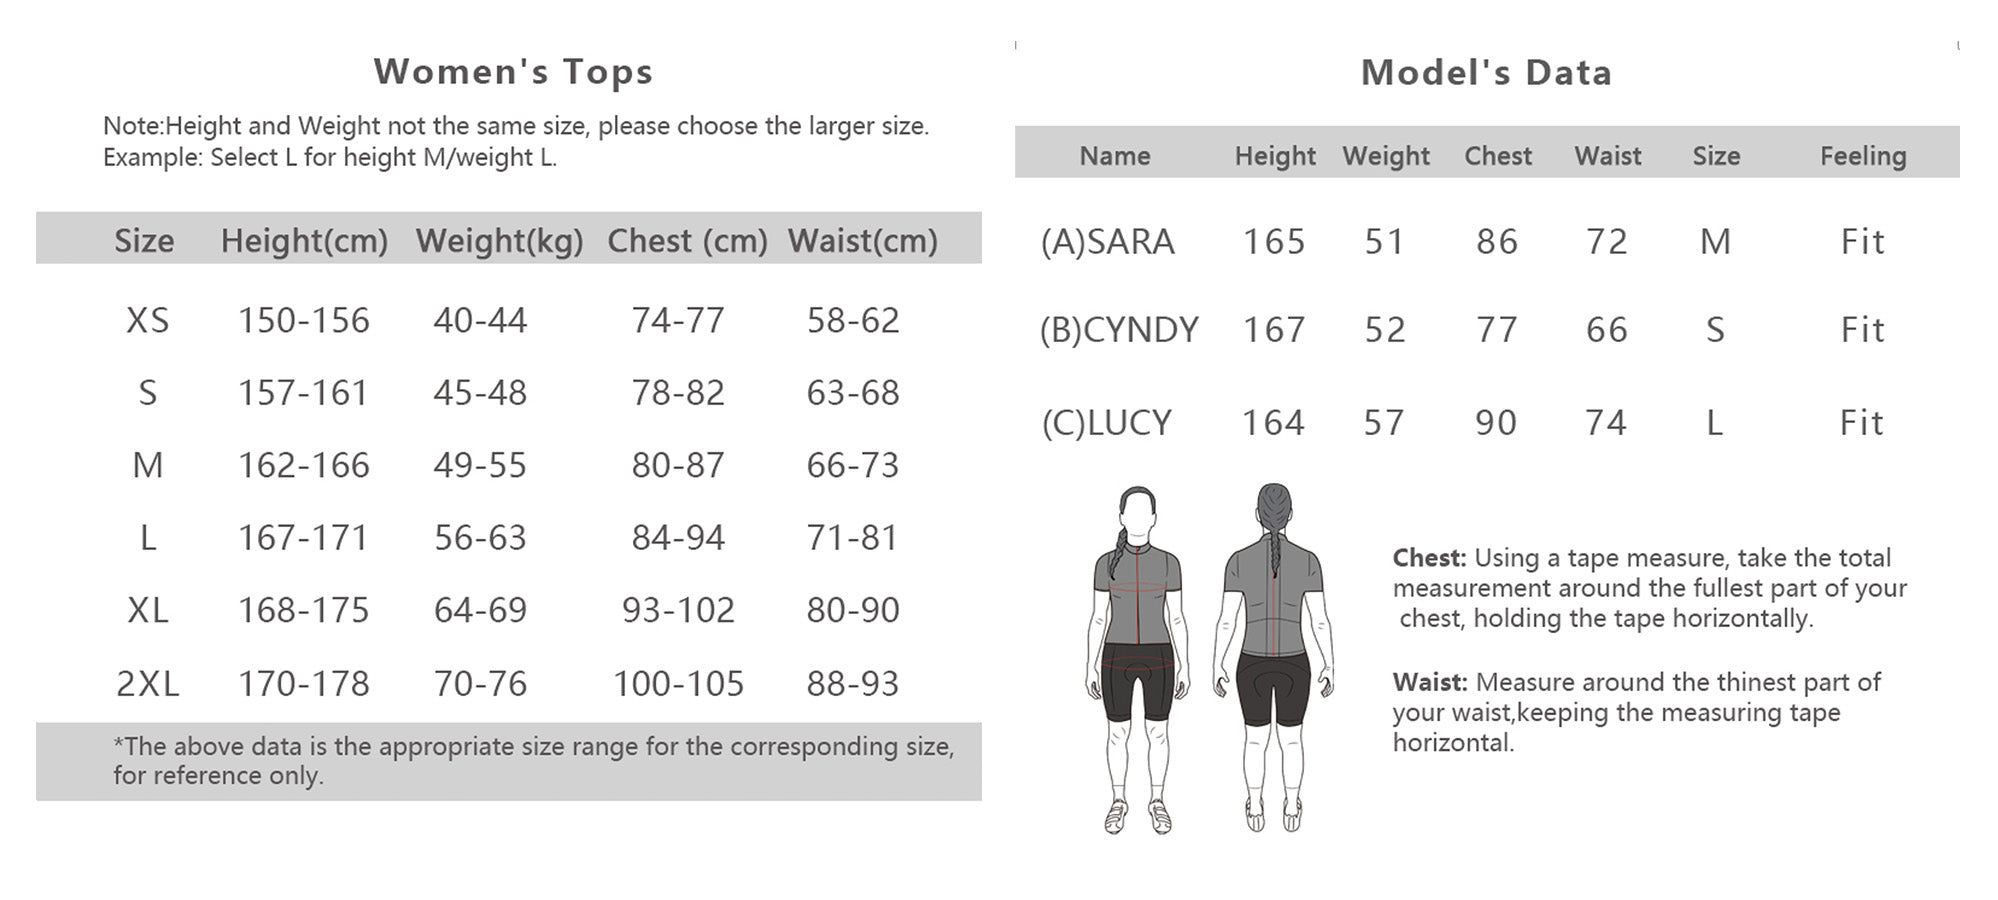 Women's Cycling Clothing Size Guide